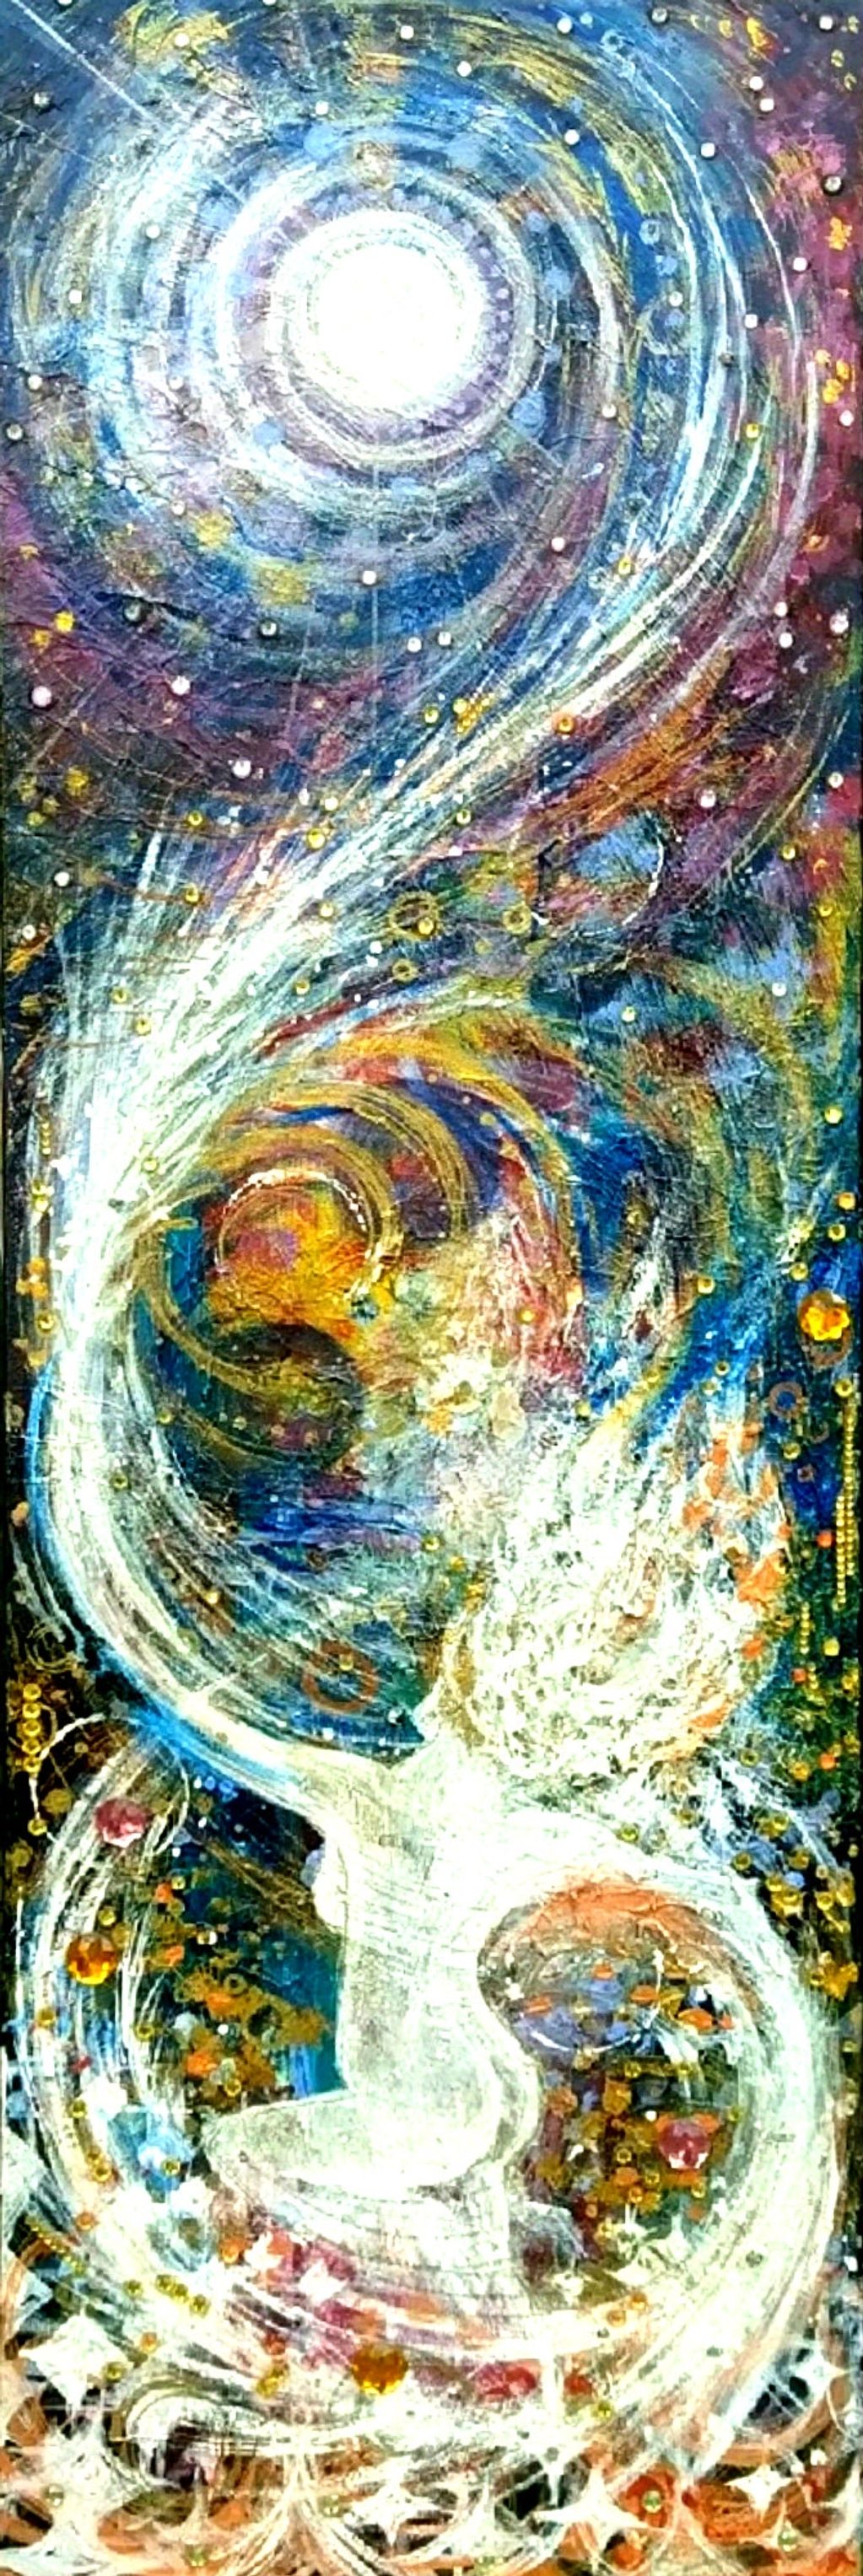 woman dancing under moonlight with flow of energy around her